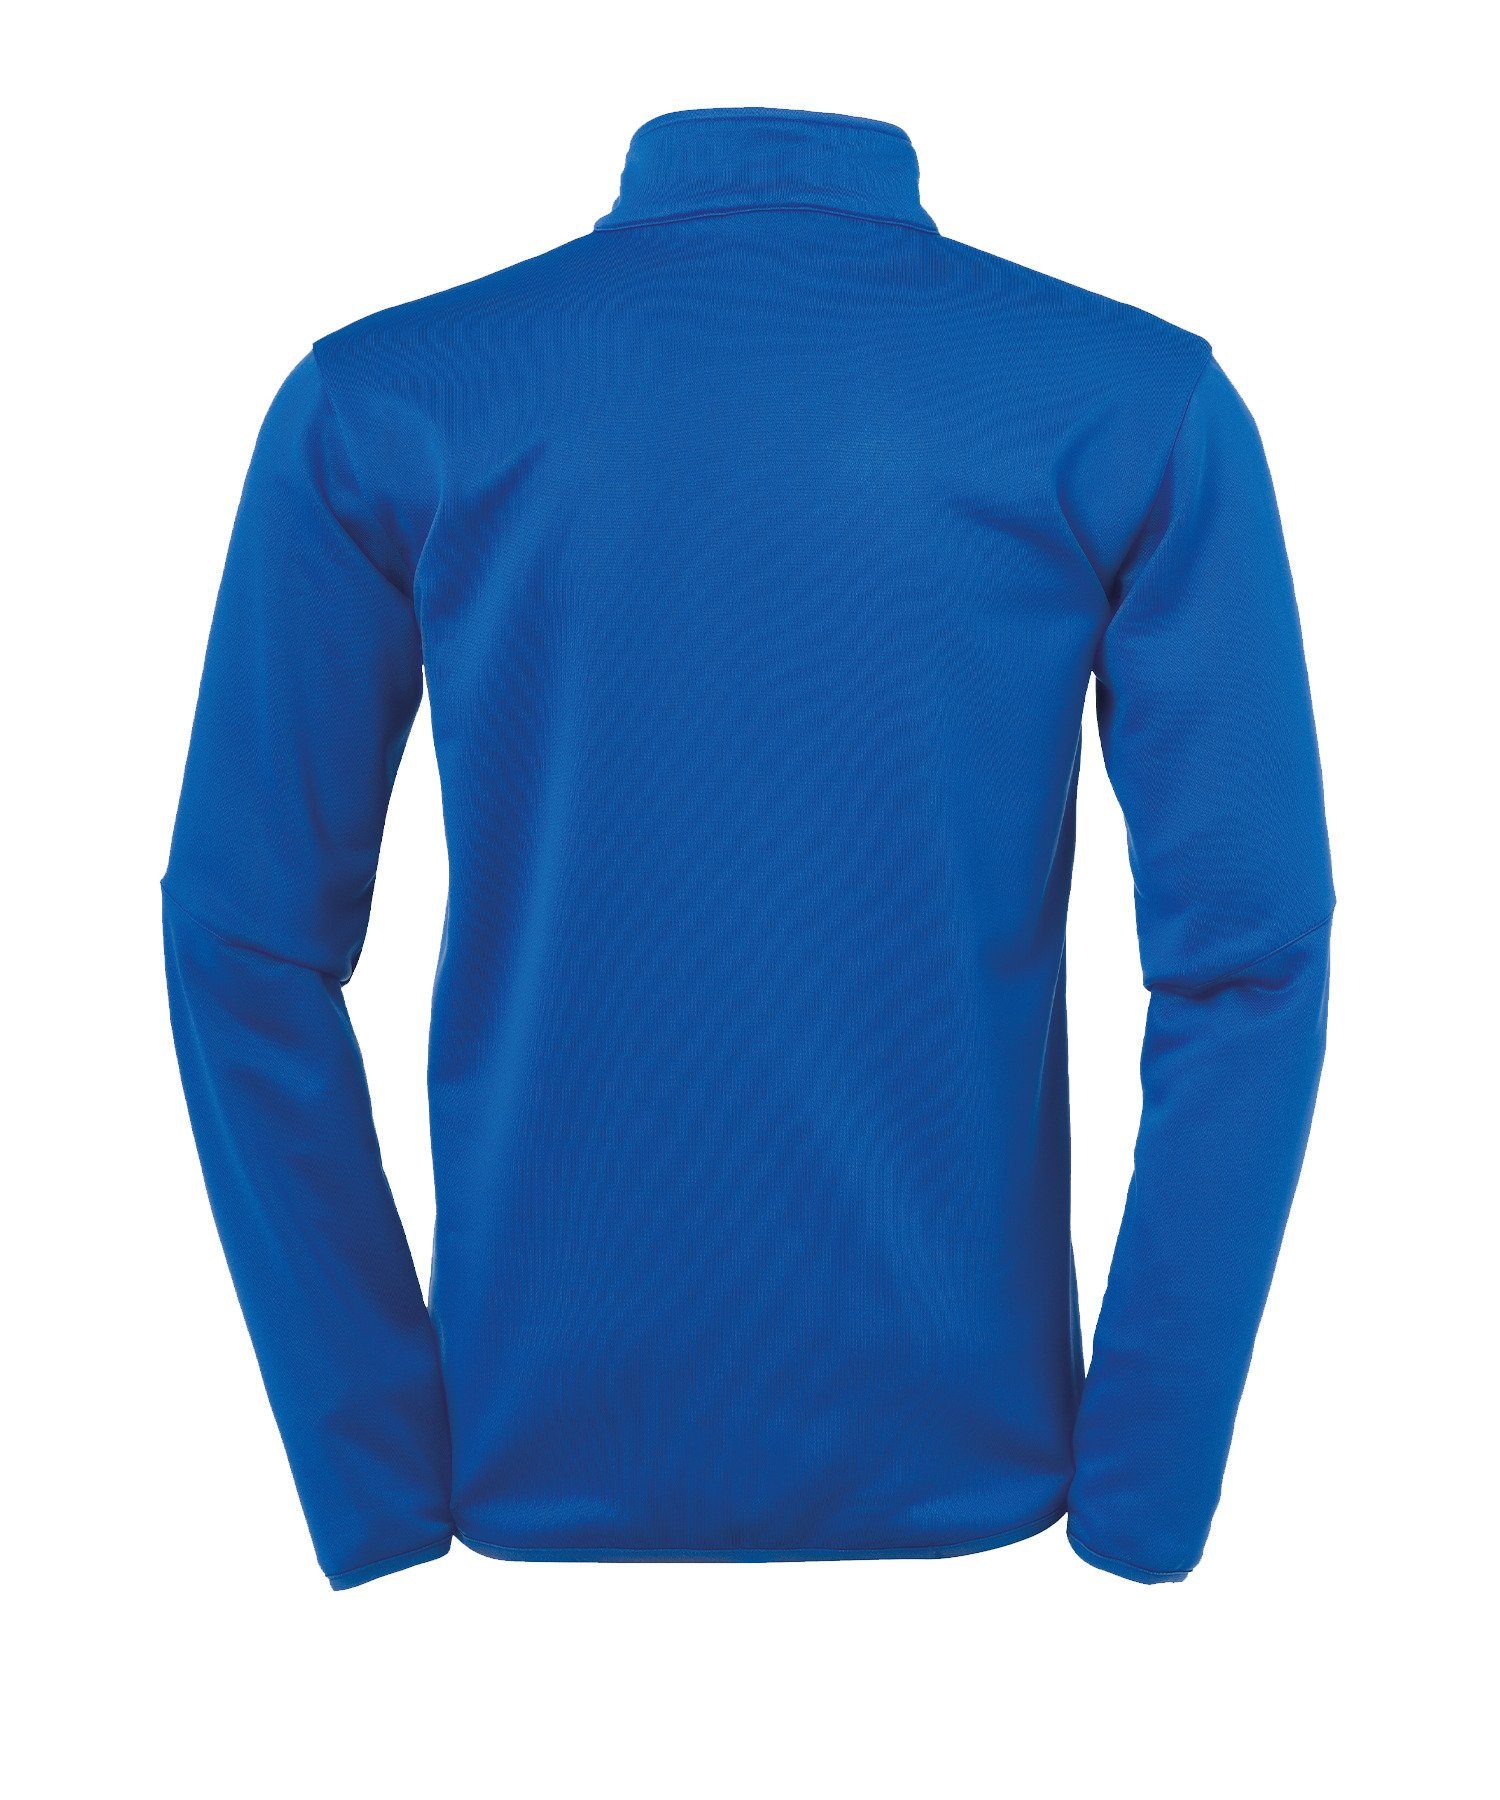 22 Sweatshirt uhlsport Stream BlauWeiss Ziptop